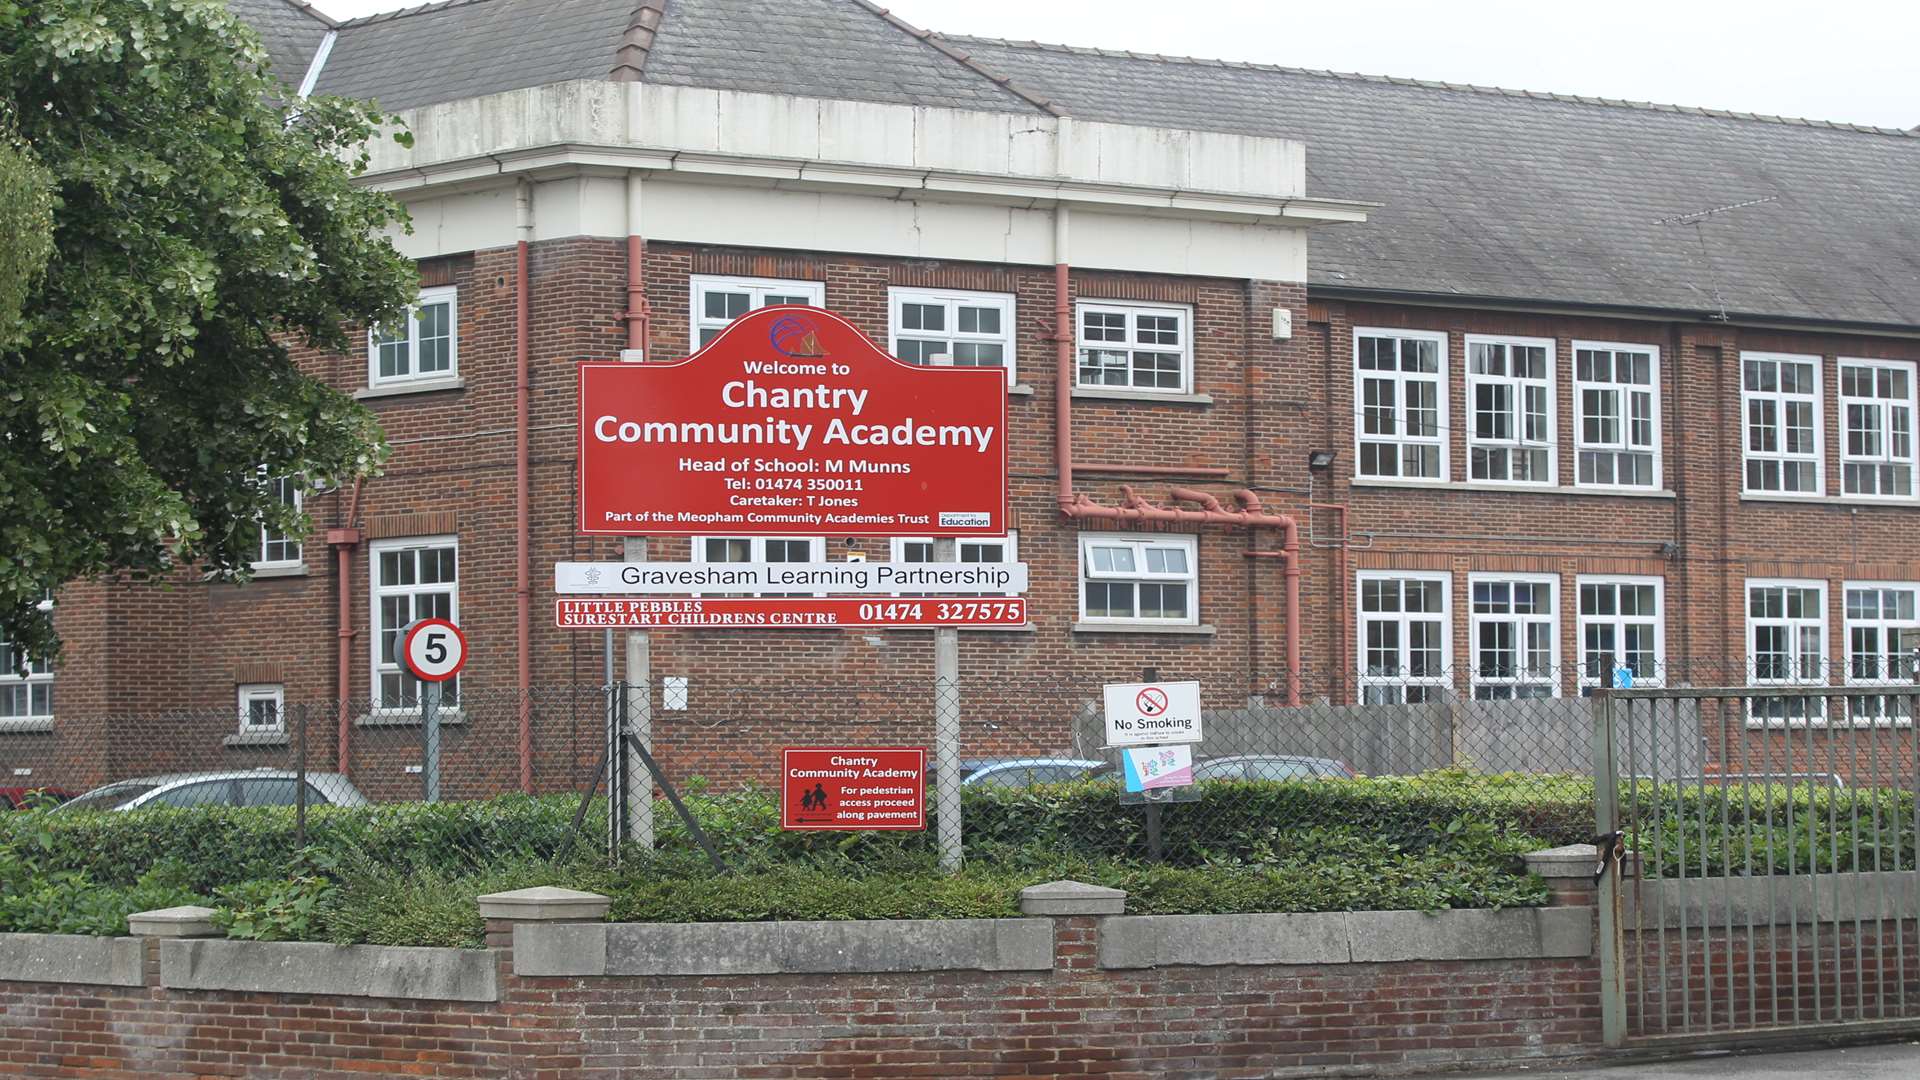 Chantry Community Academy in Ordnance Road, Gravesend